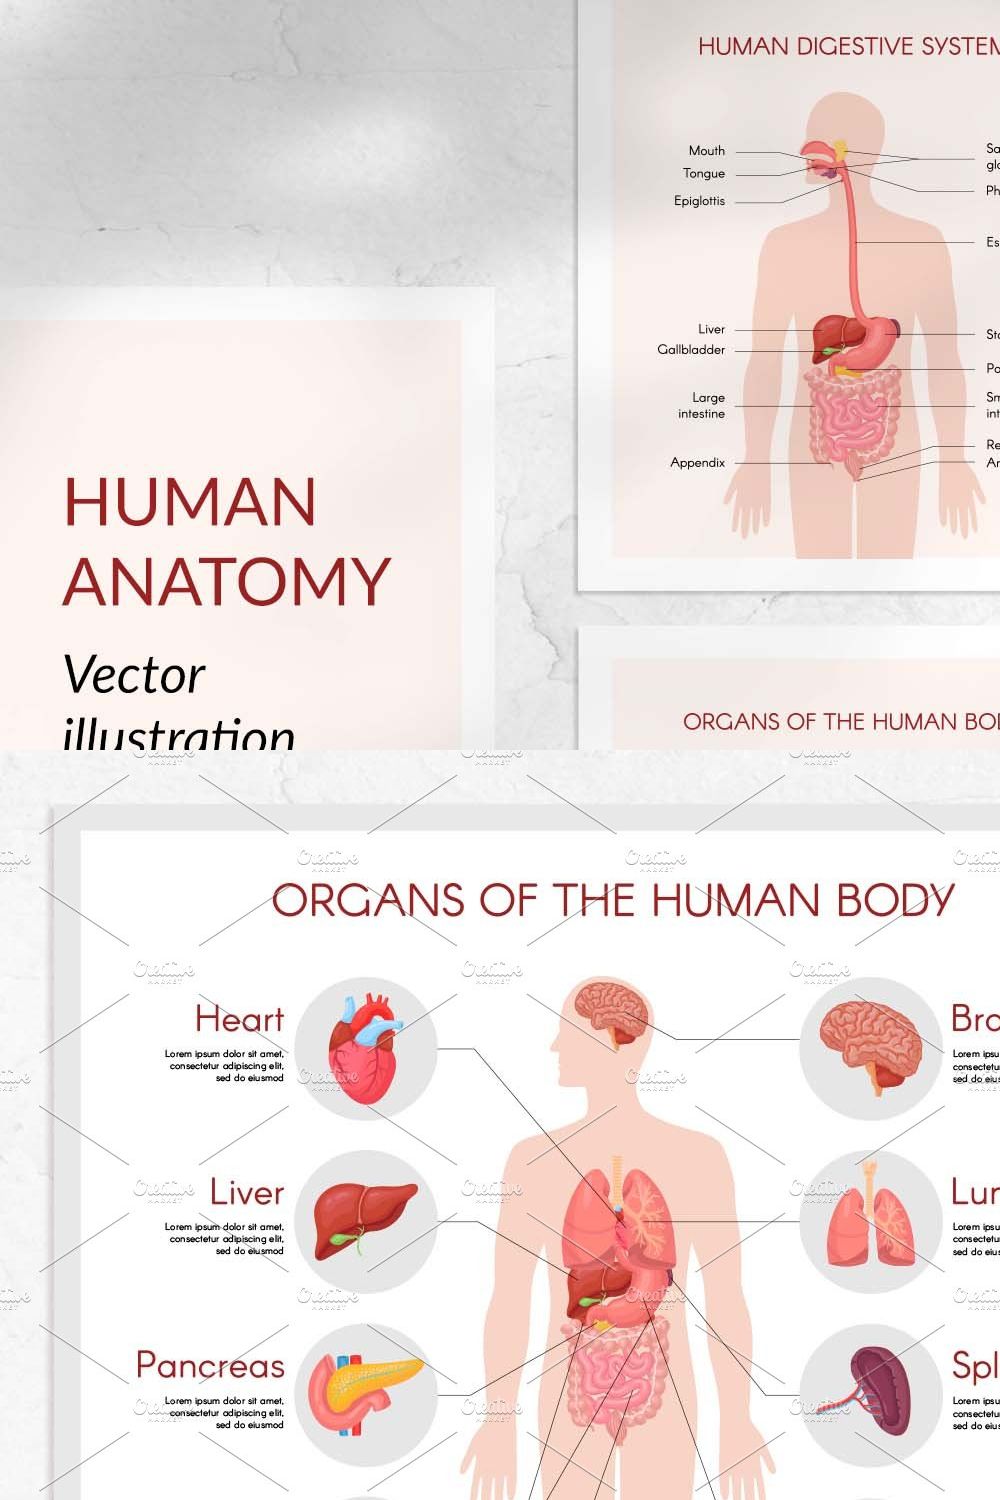 Human body anatomy vectors pinterest preview image.